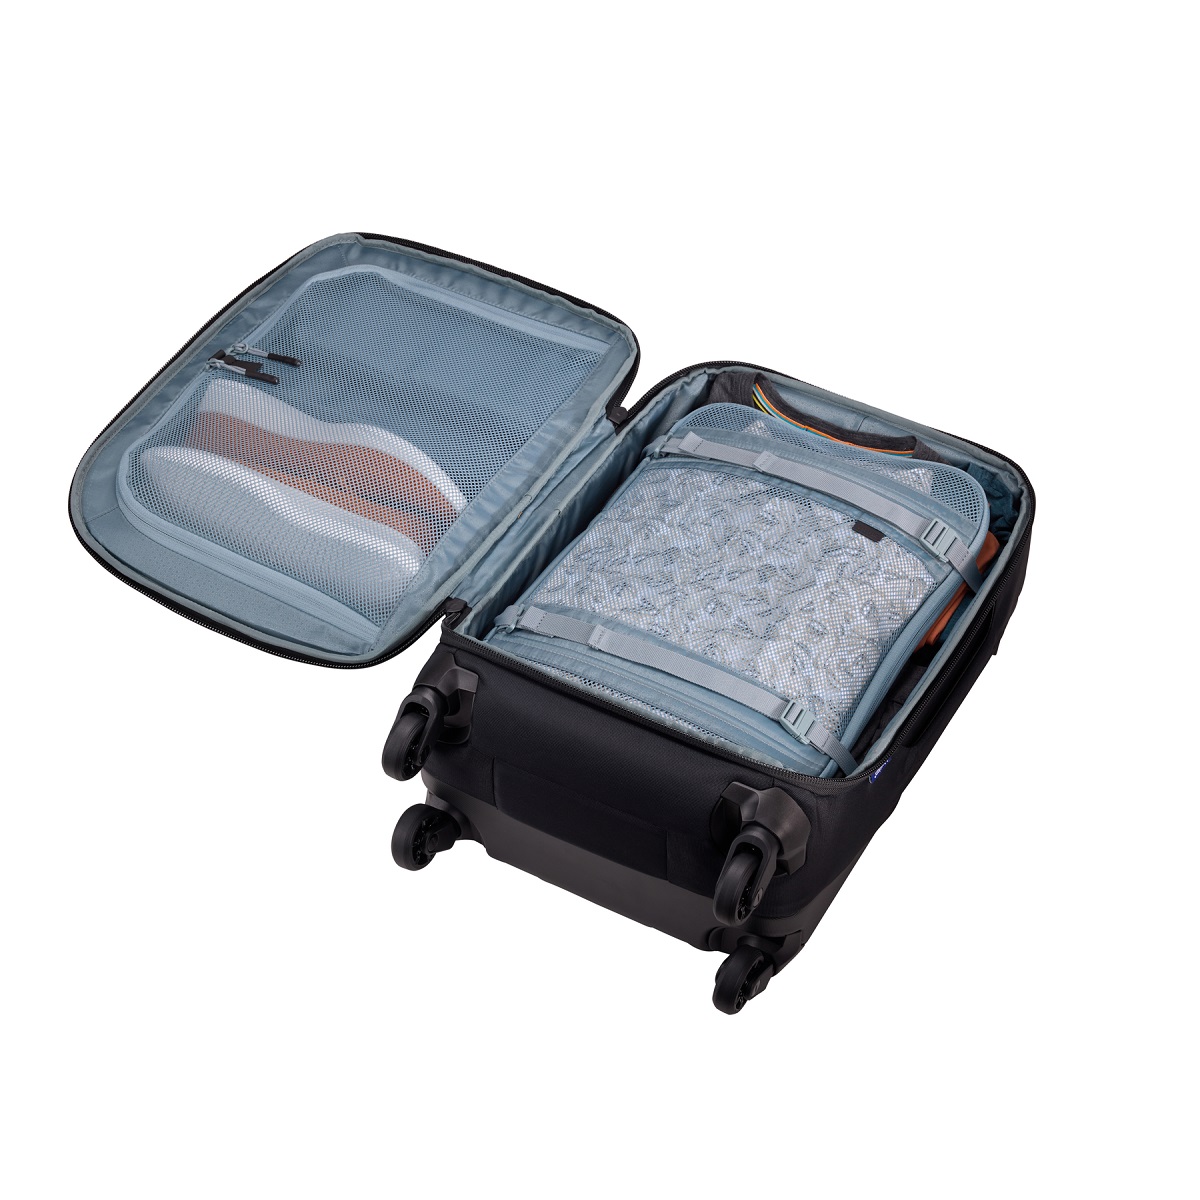 Thule Subterra 2 kofer s kotačima 55cm/35L CarryOn za unos ručne prtljage u zrakoplov - crni